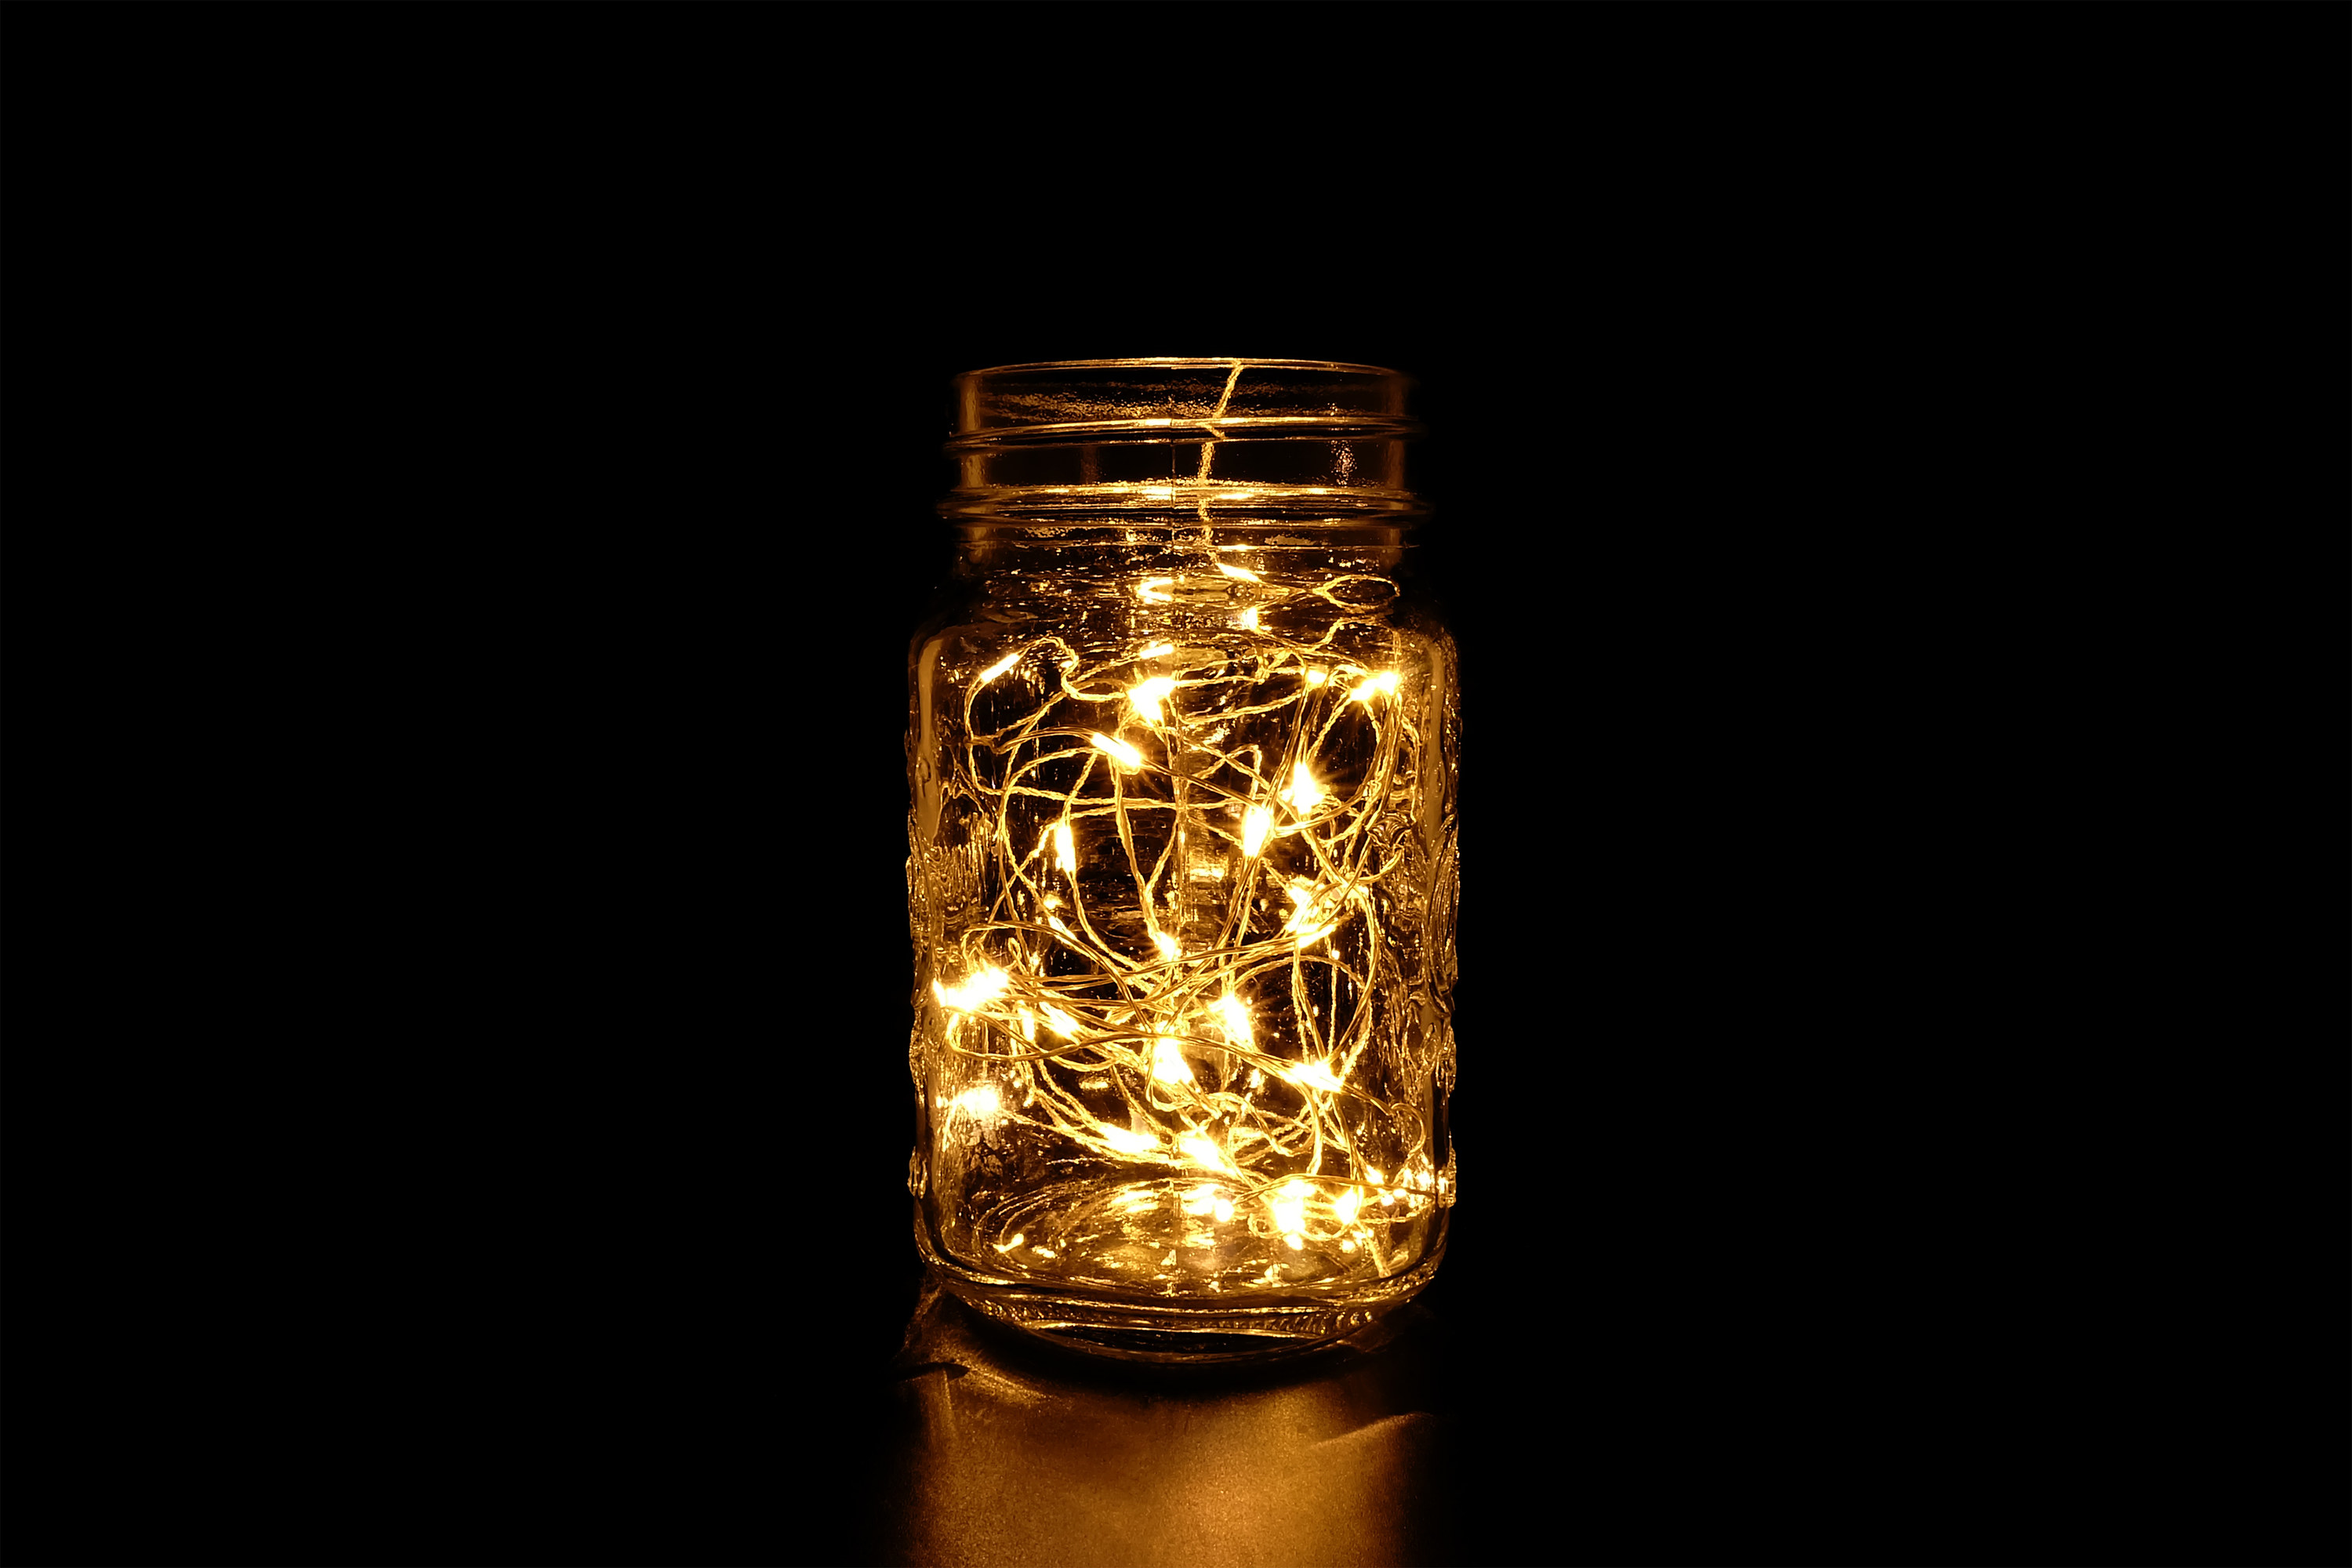 A strand of lit fairy lights inside a glass Mason jar